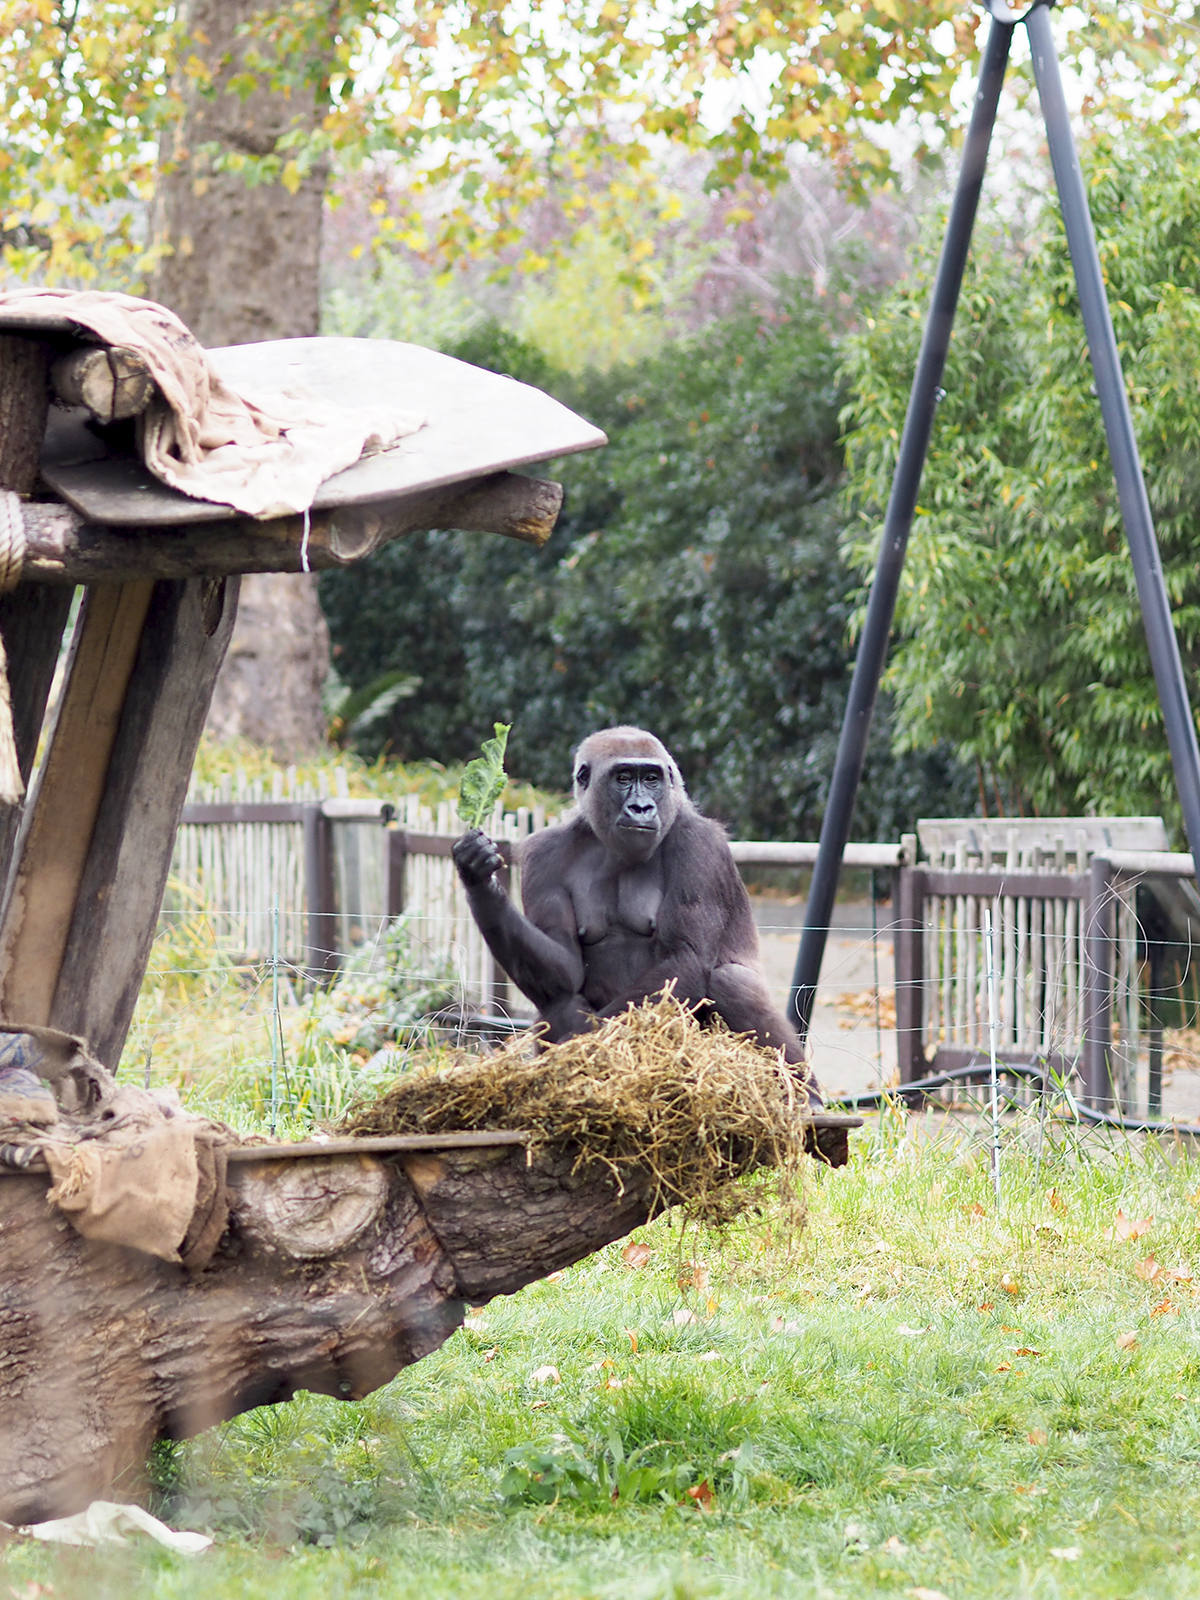 ZSL london zoo gorillas